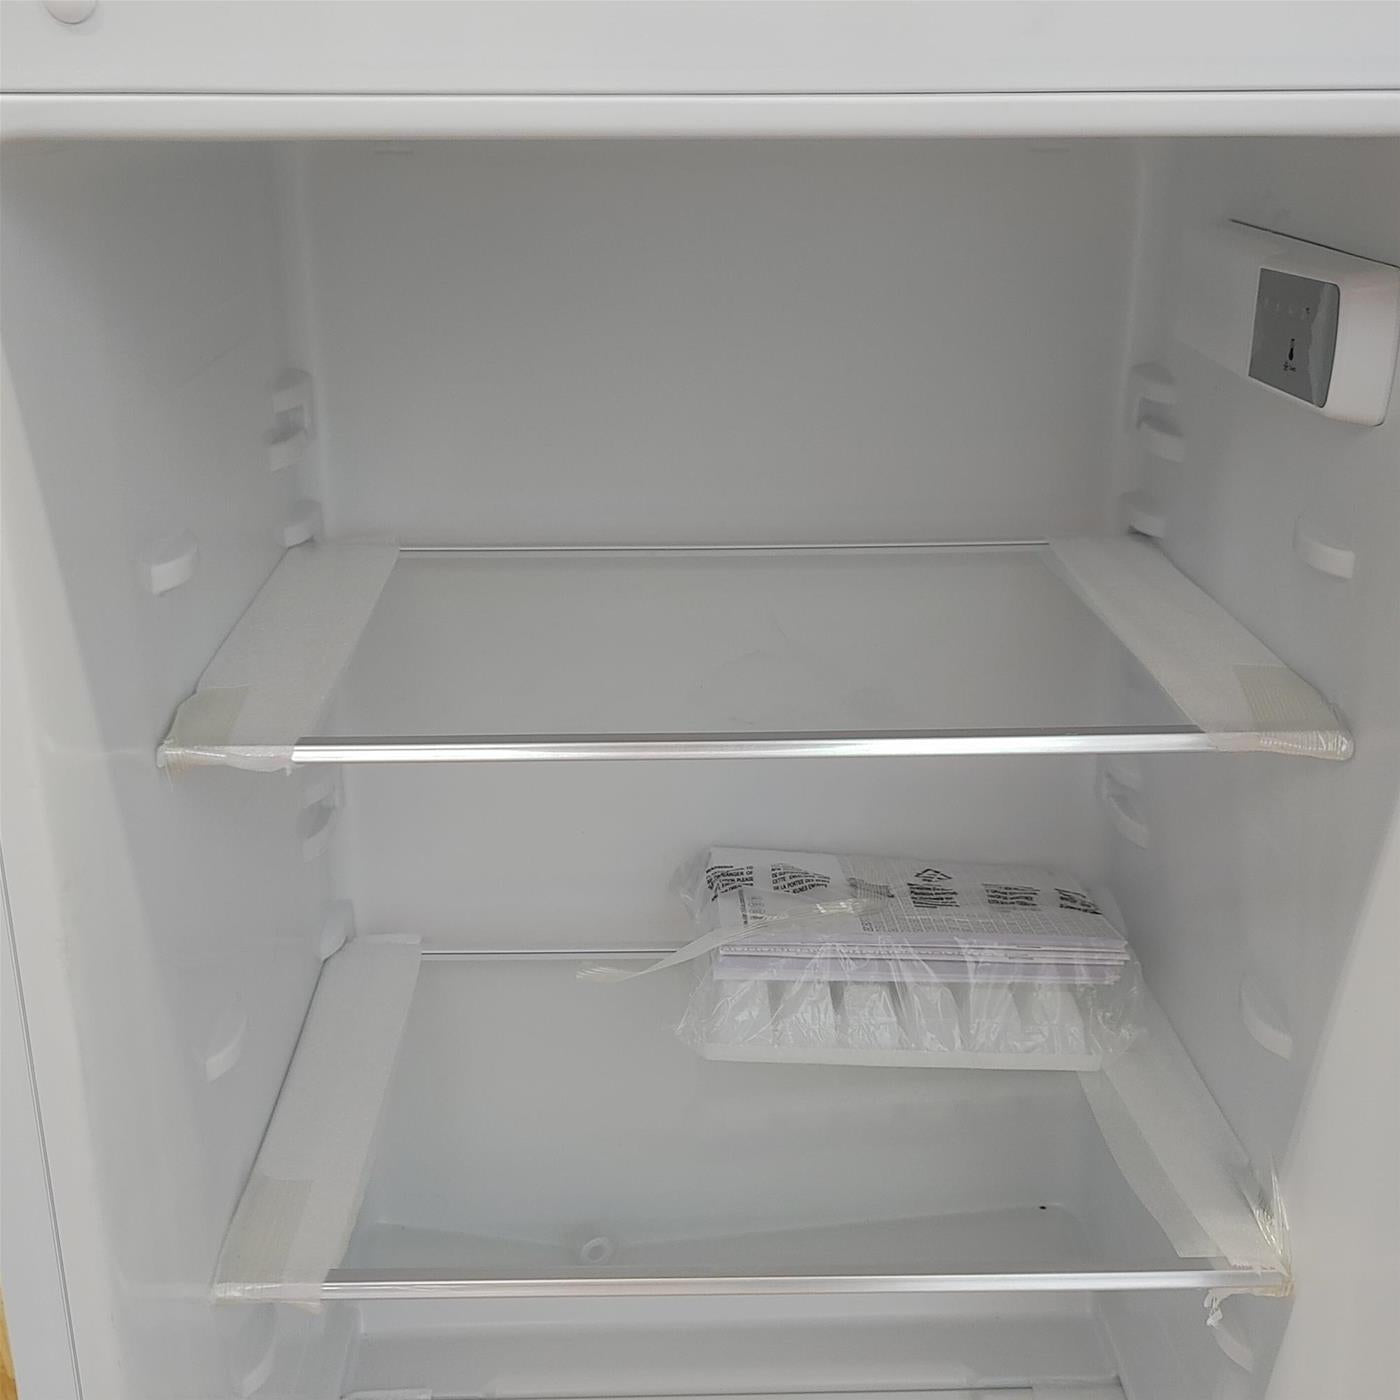 Electrolux LTB1AF24W0 frigorifero con congelatore Libera installazione 164 L F Bianco